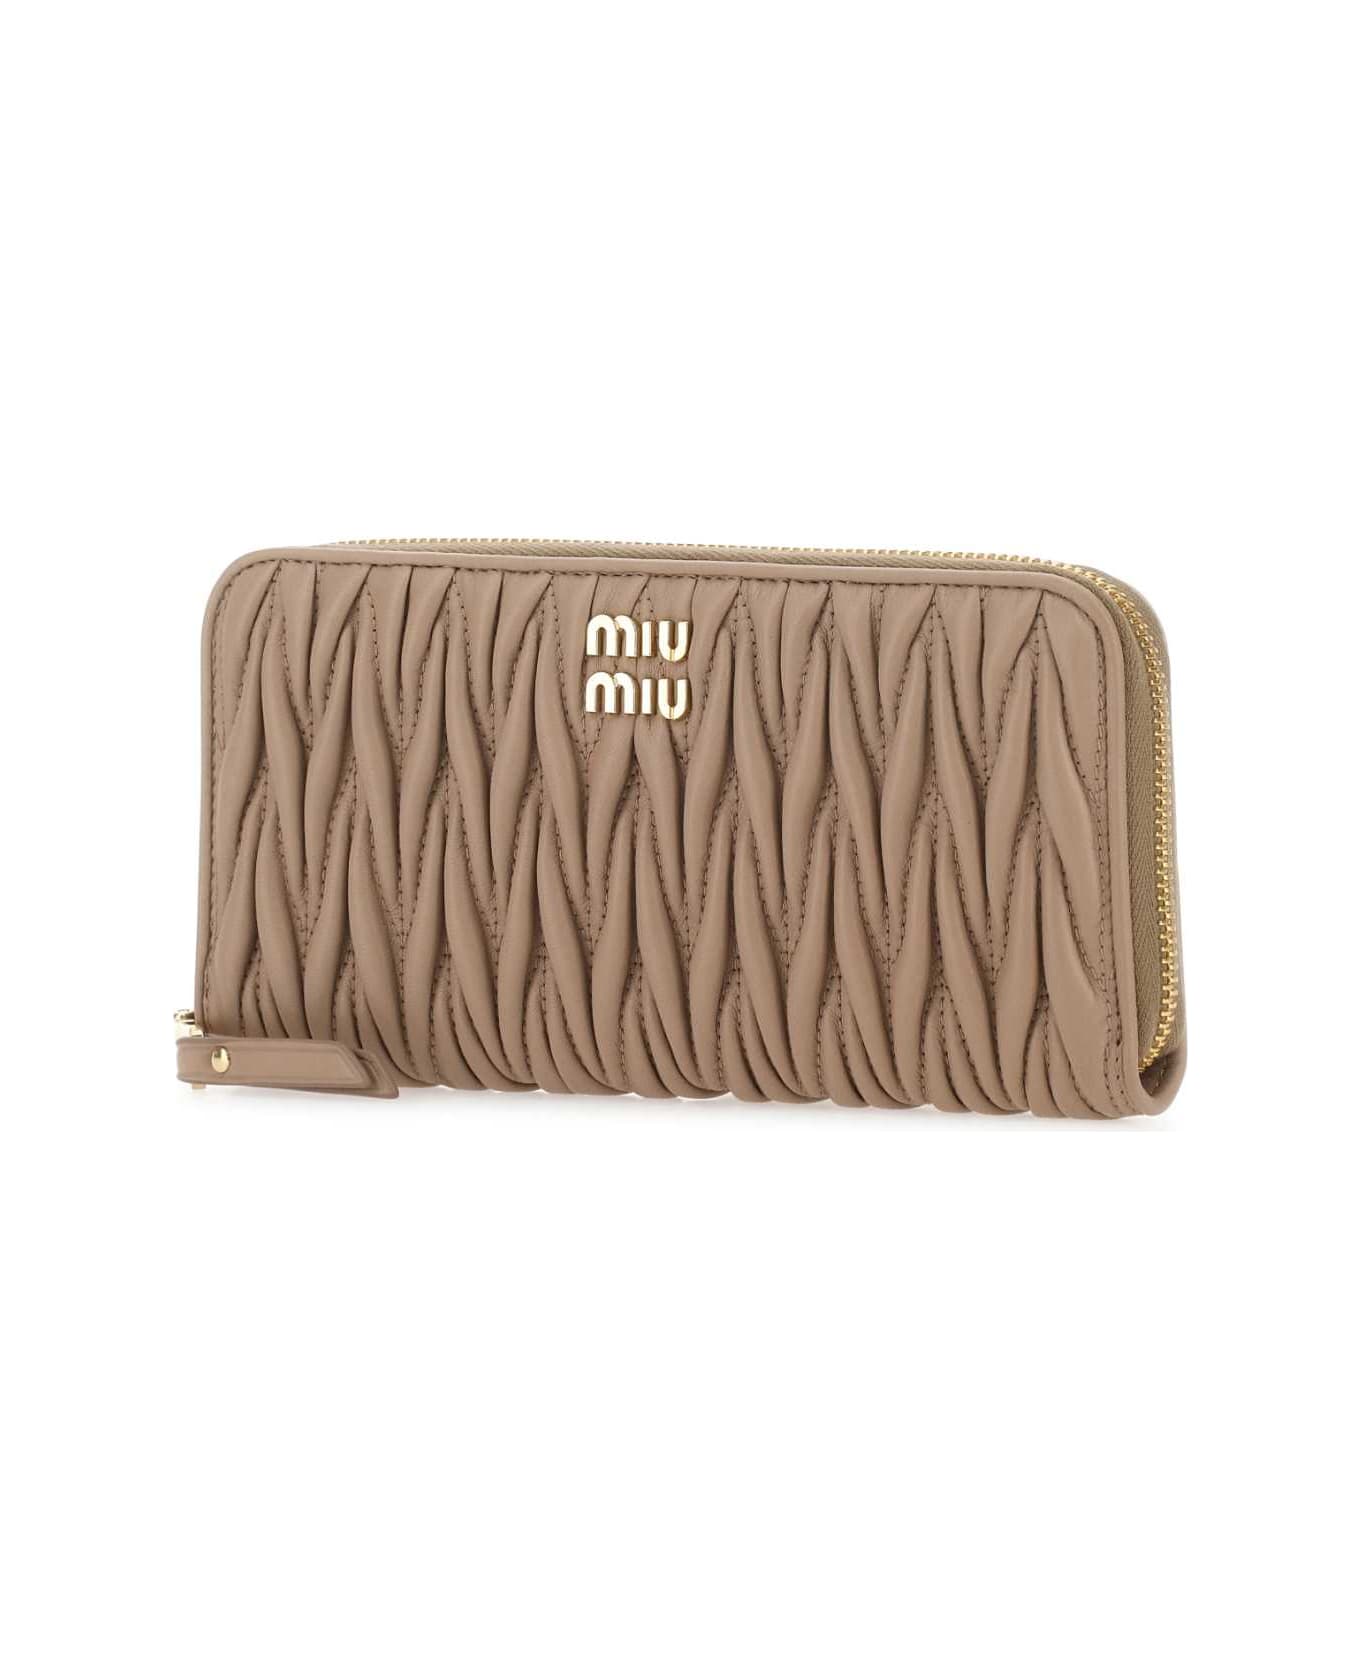 Miu Miu Powder Pink Nappa Leather Wallet - CAMMEO 財布